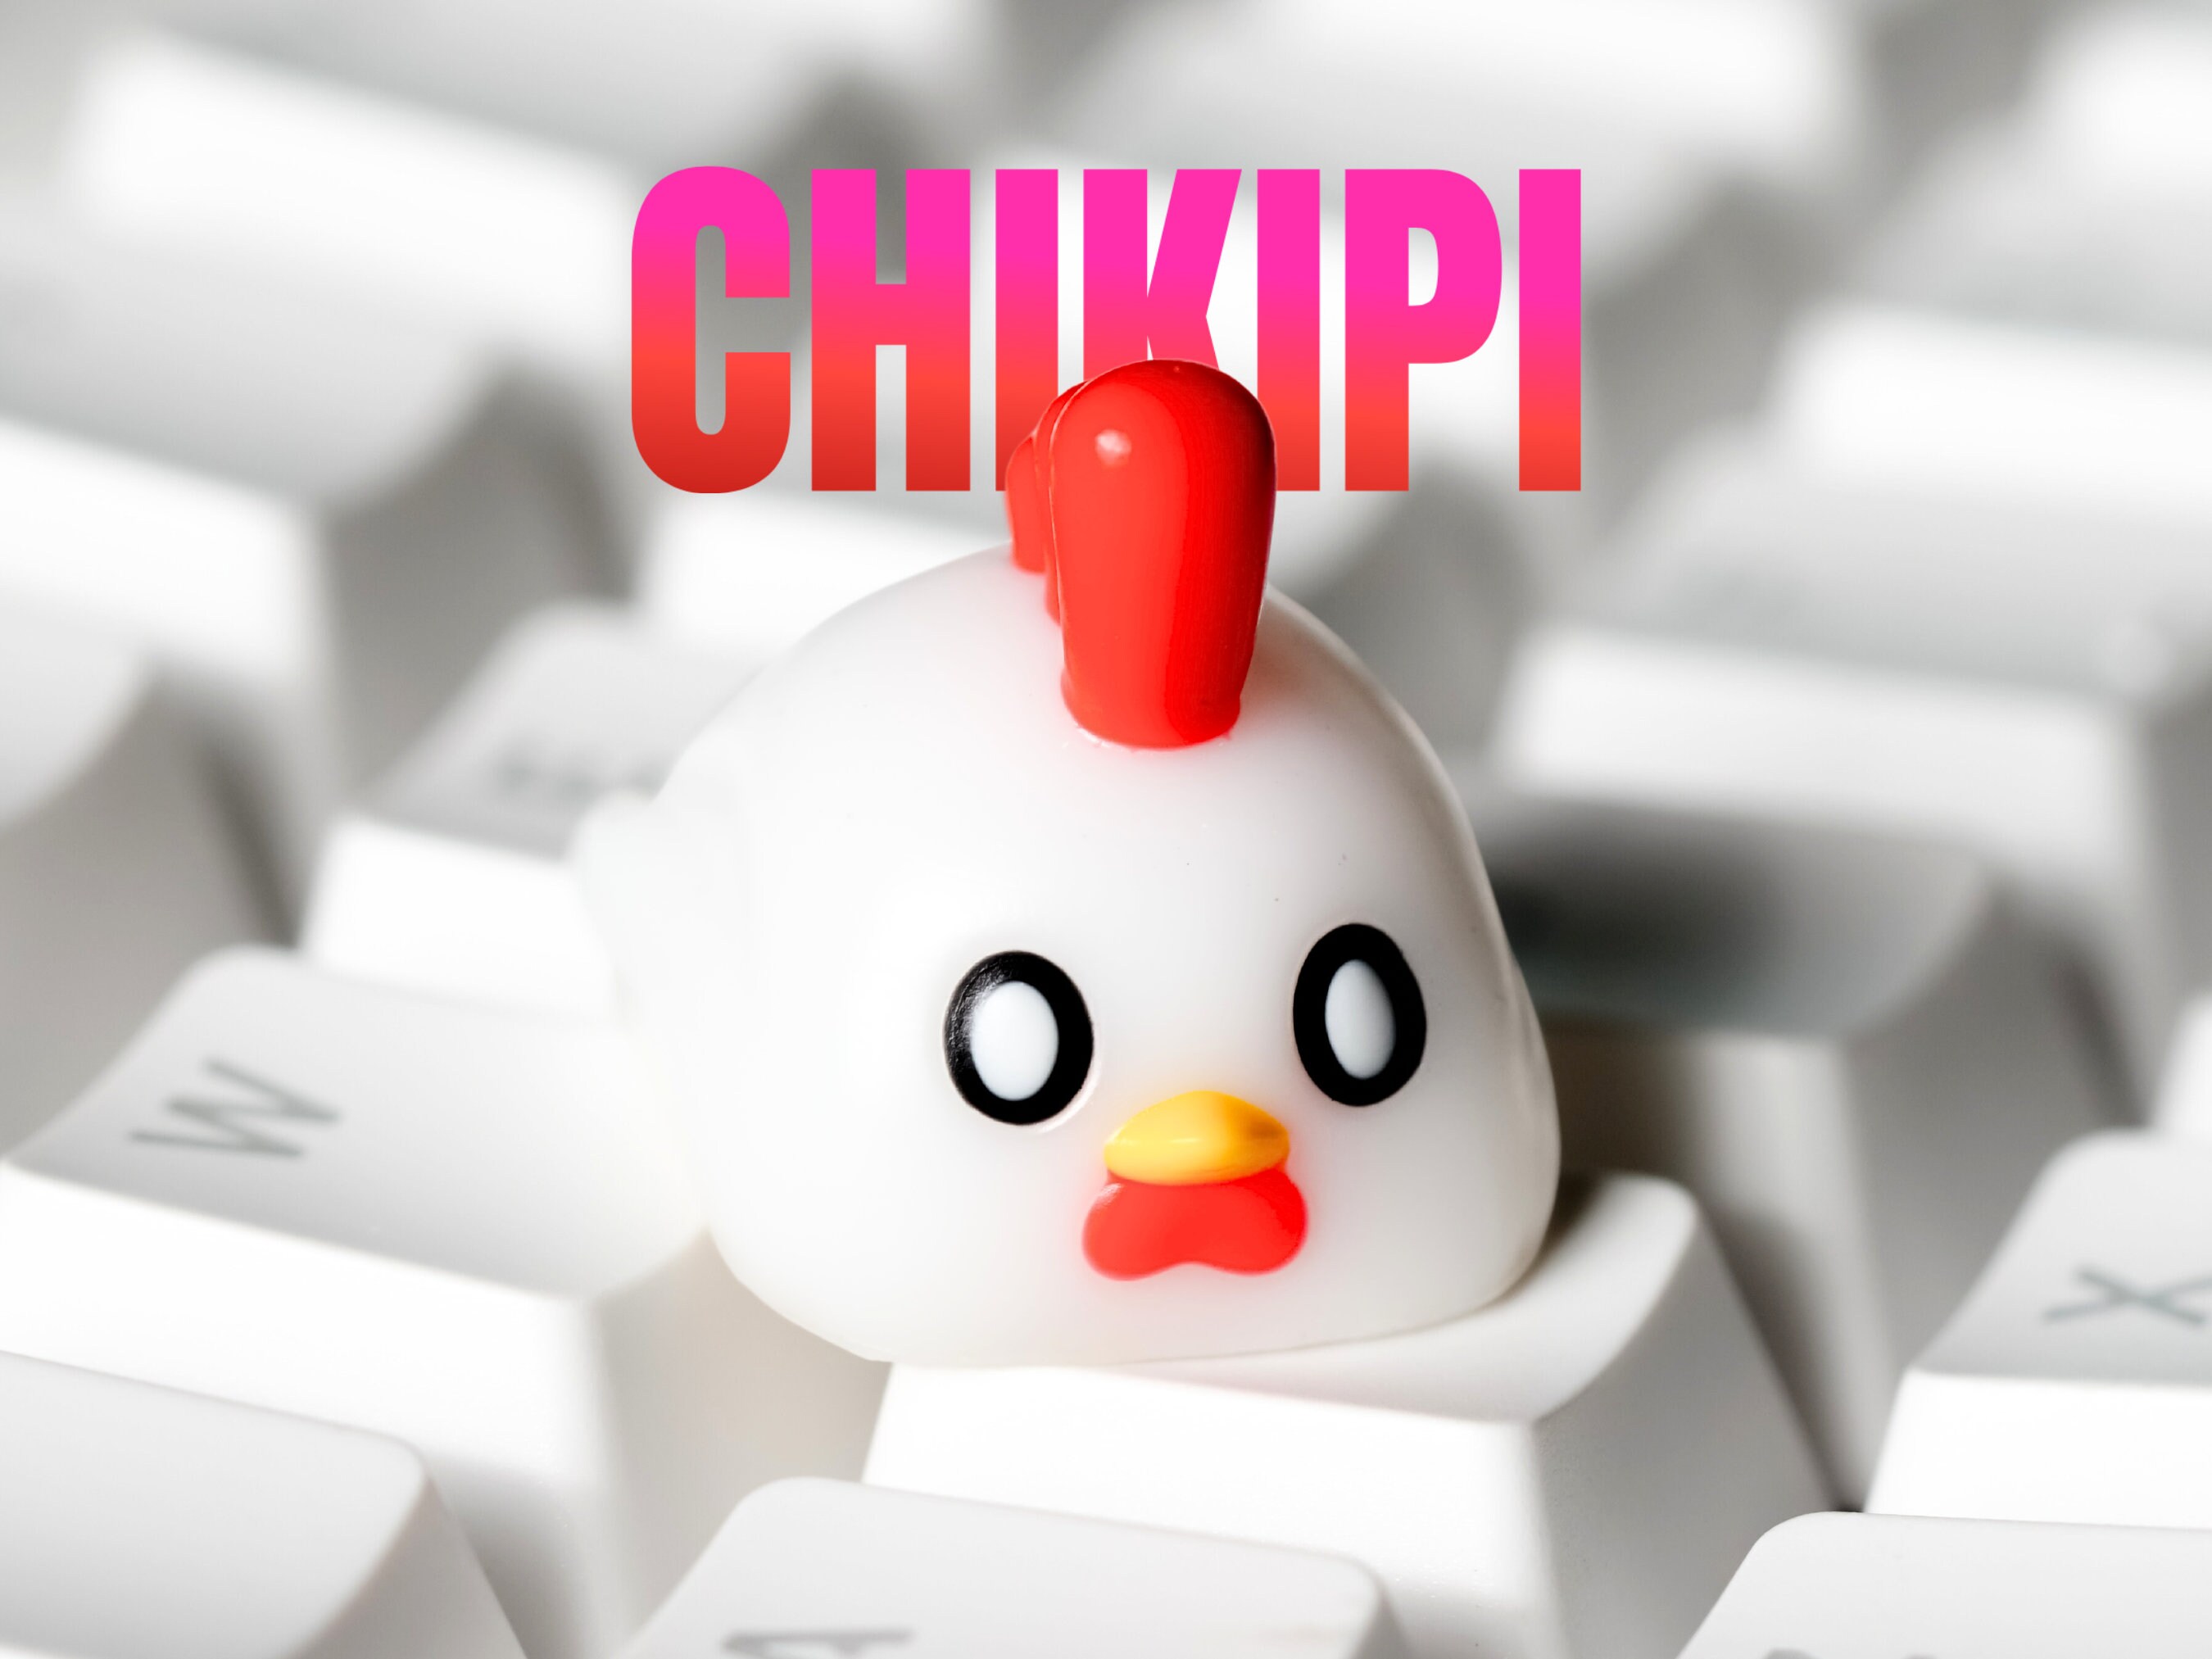 Chikipi Keycap, Palworld Keycap, Chikipi Open Eyes, Gaming Keycap, Keycap for Cherry MX Switches Mechanical Keyboard, Gift for him